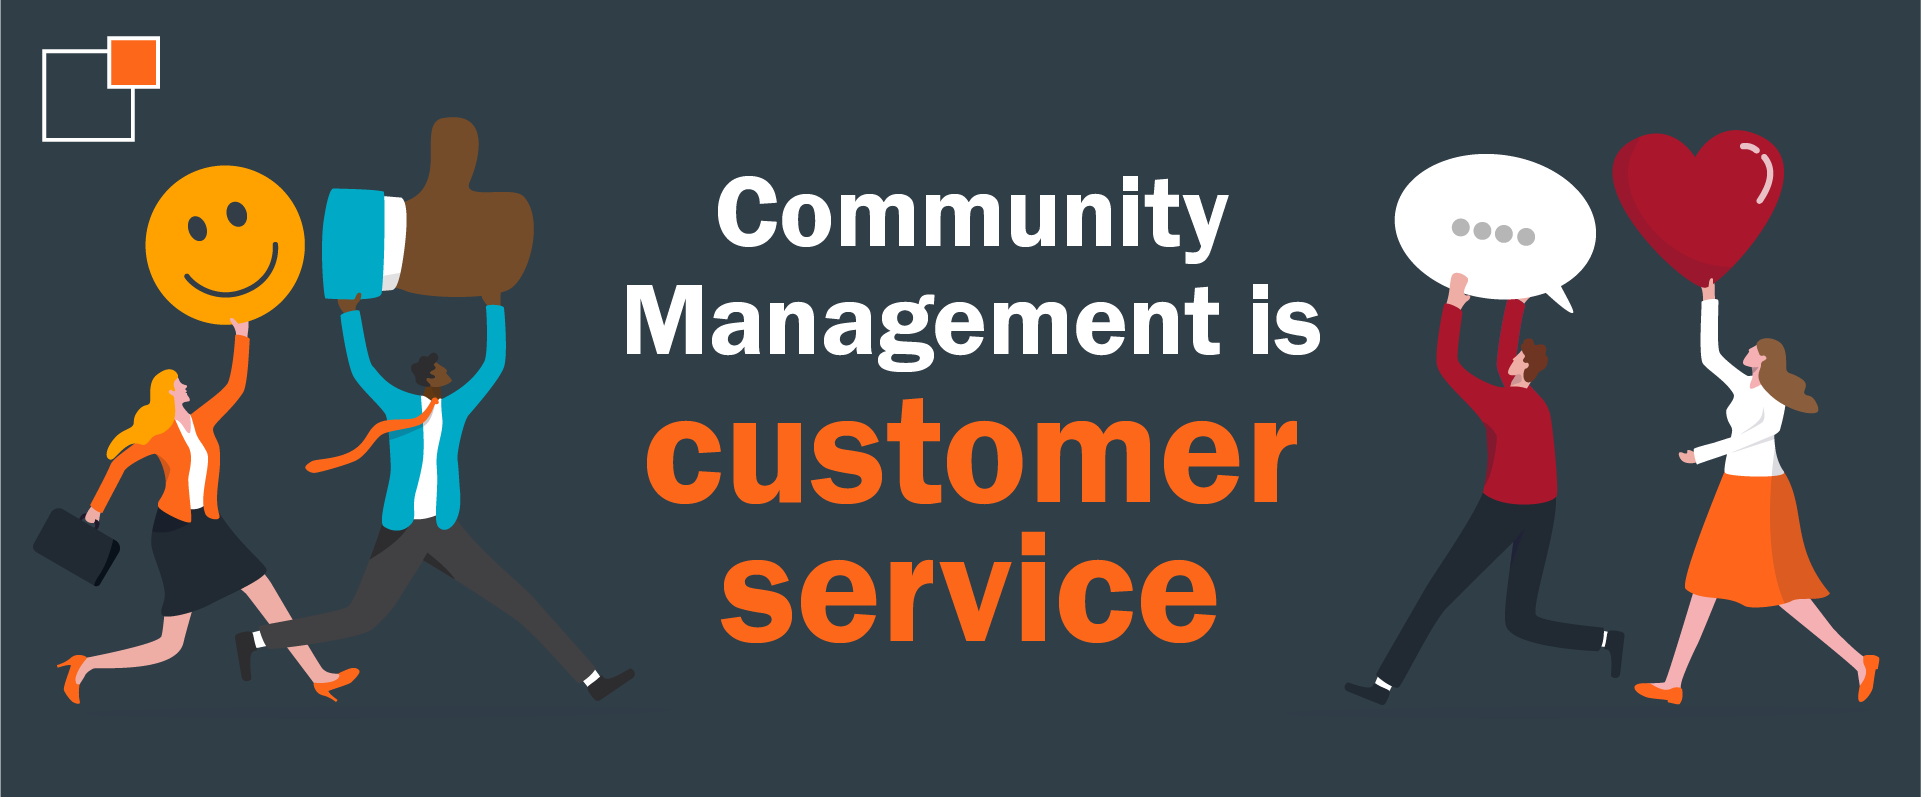 Community management is customer service